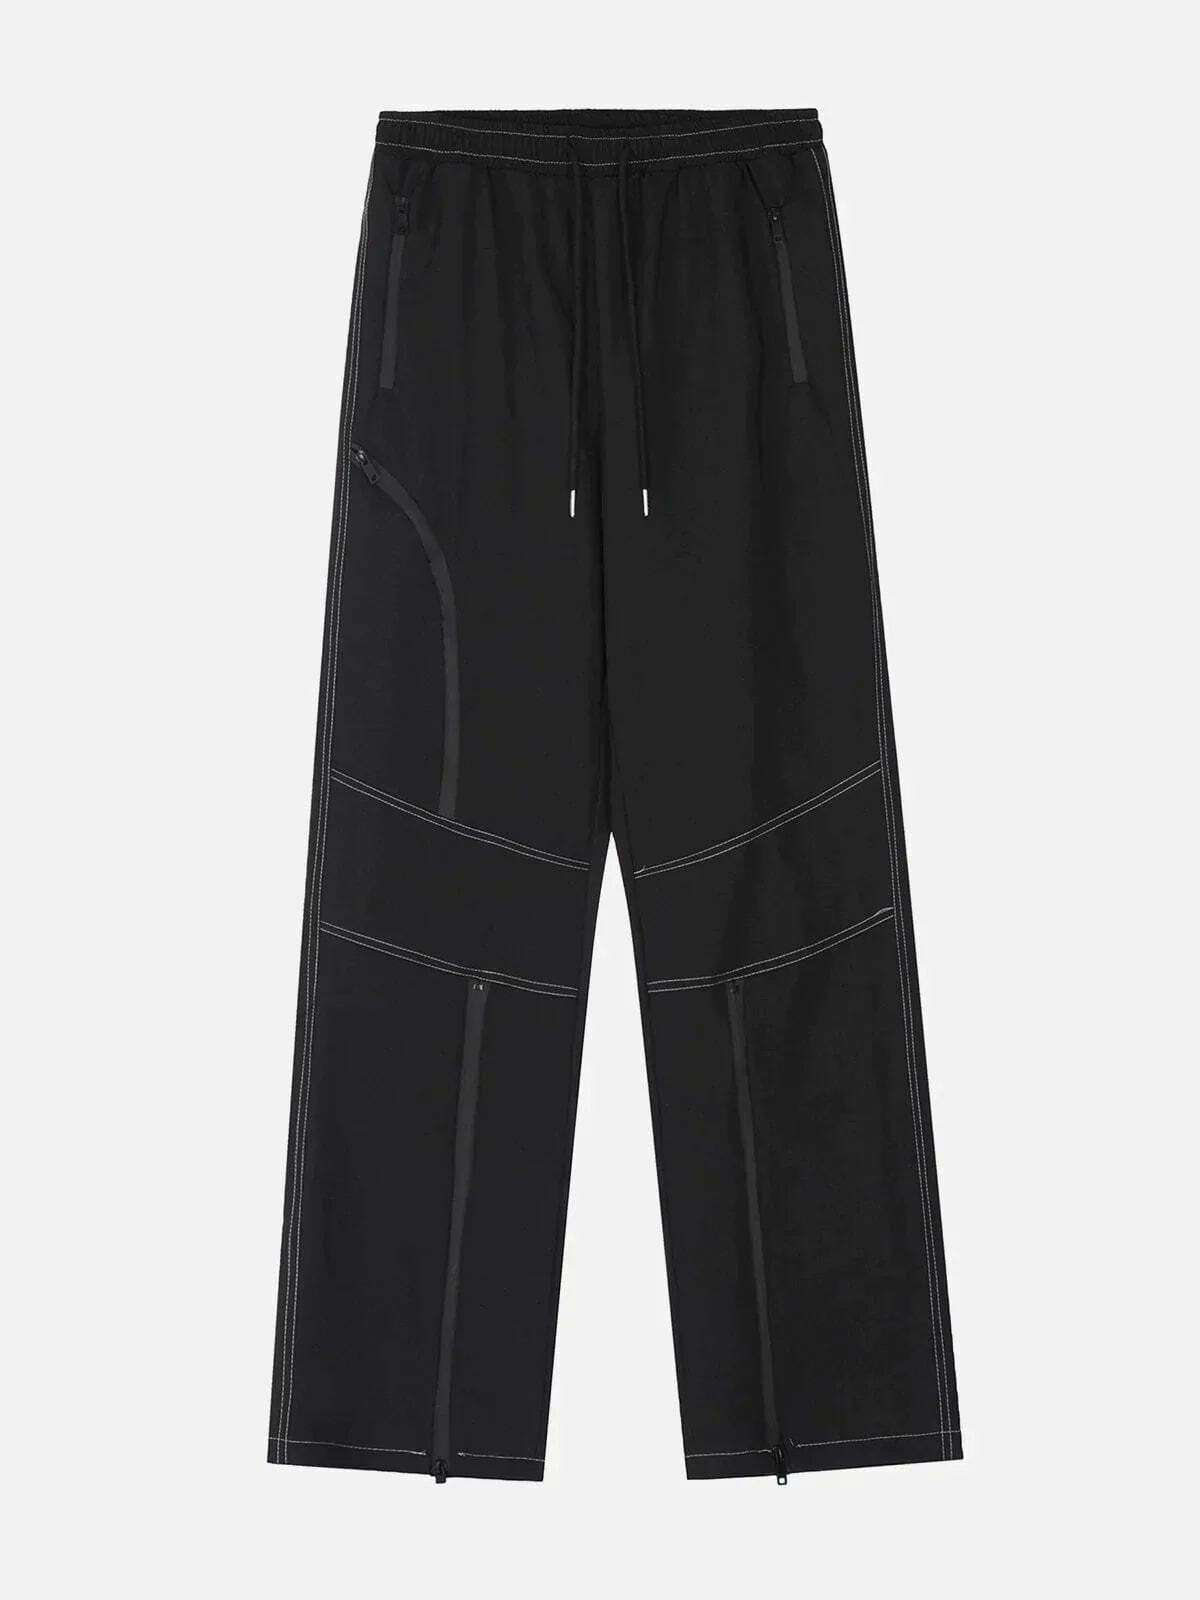 revolutionary splicing zip pants edgy & urban streetwear 4677